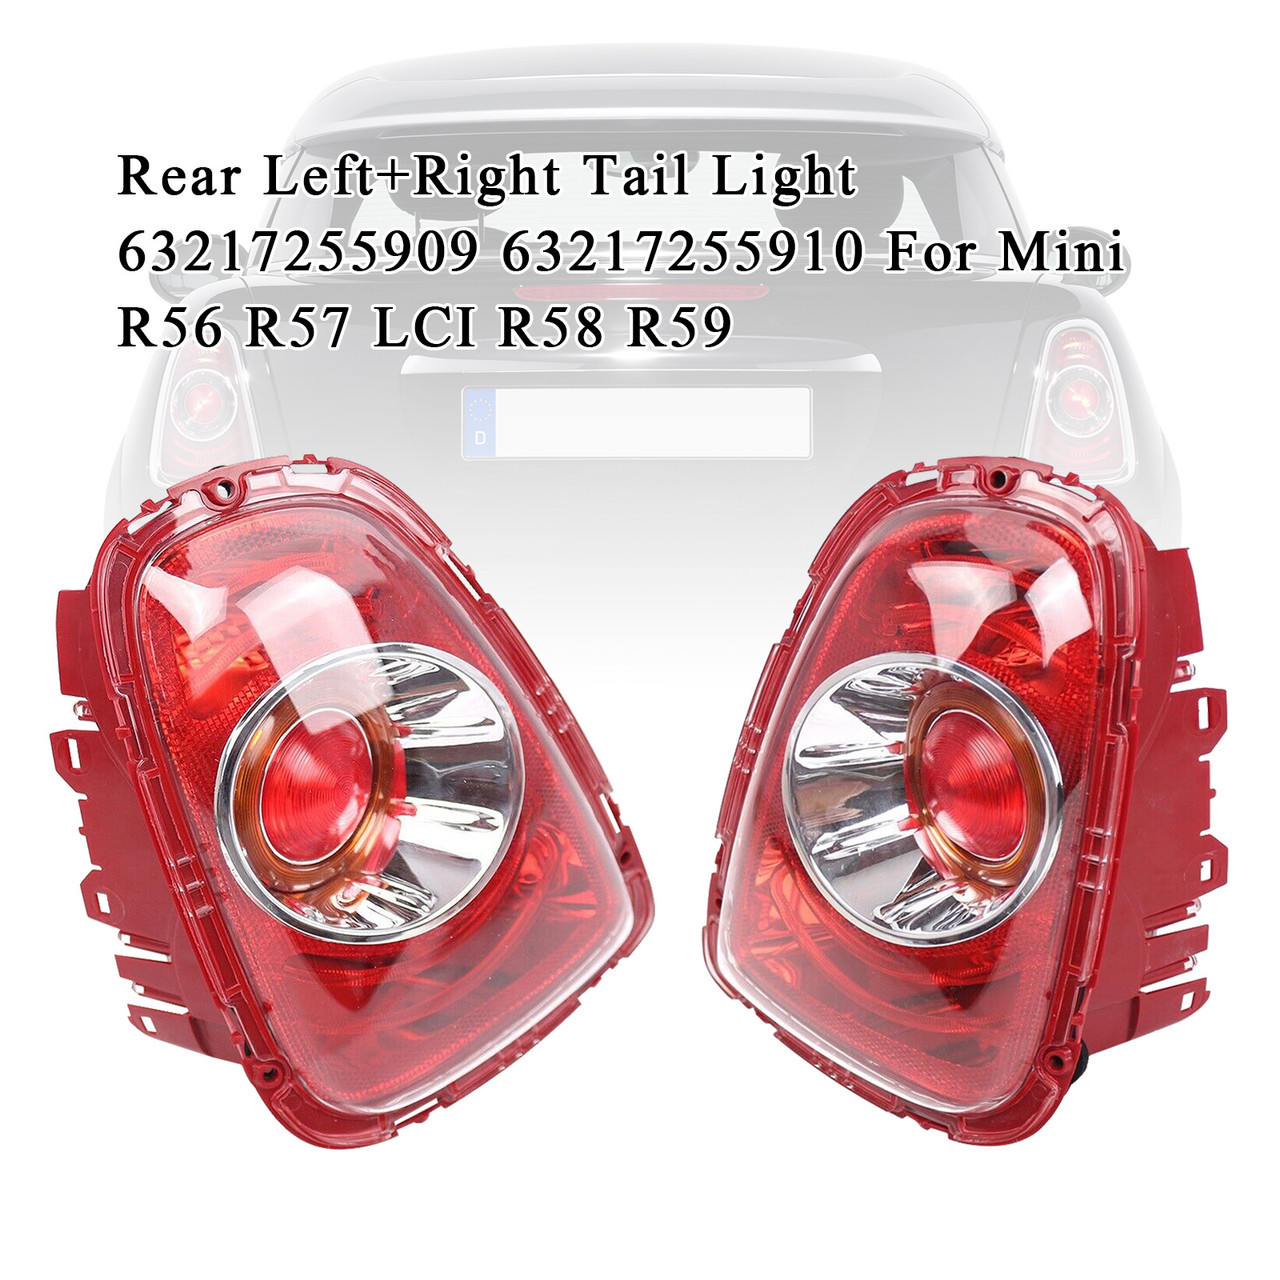 Rear L+R Tail Light 63217255909 63217255910 For Mini R56 R57 LCI R58 R59